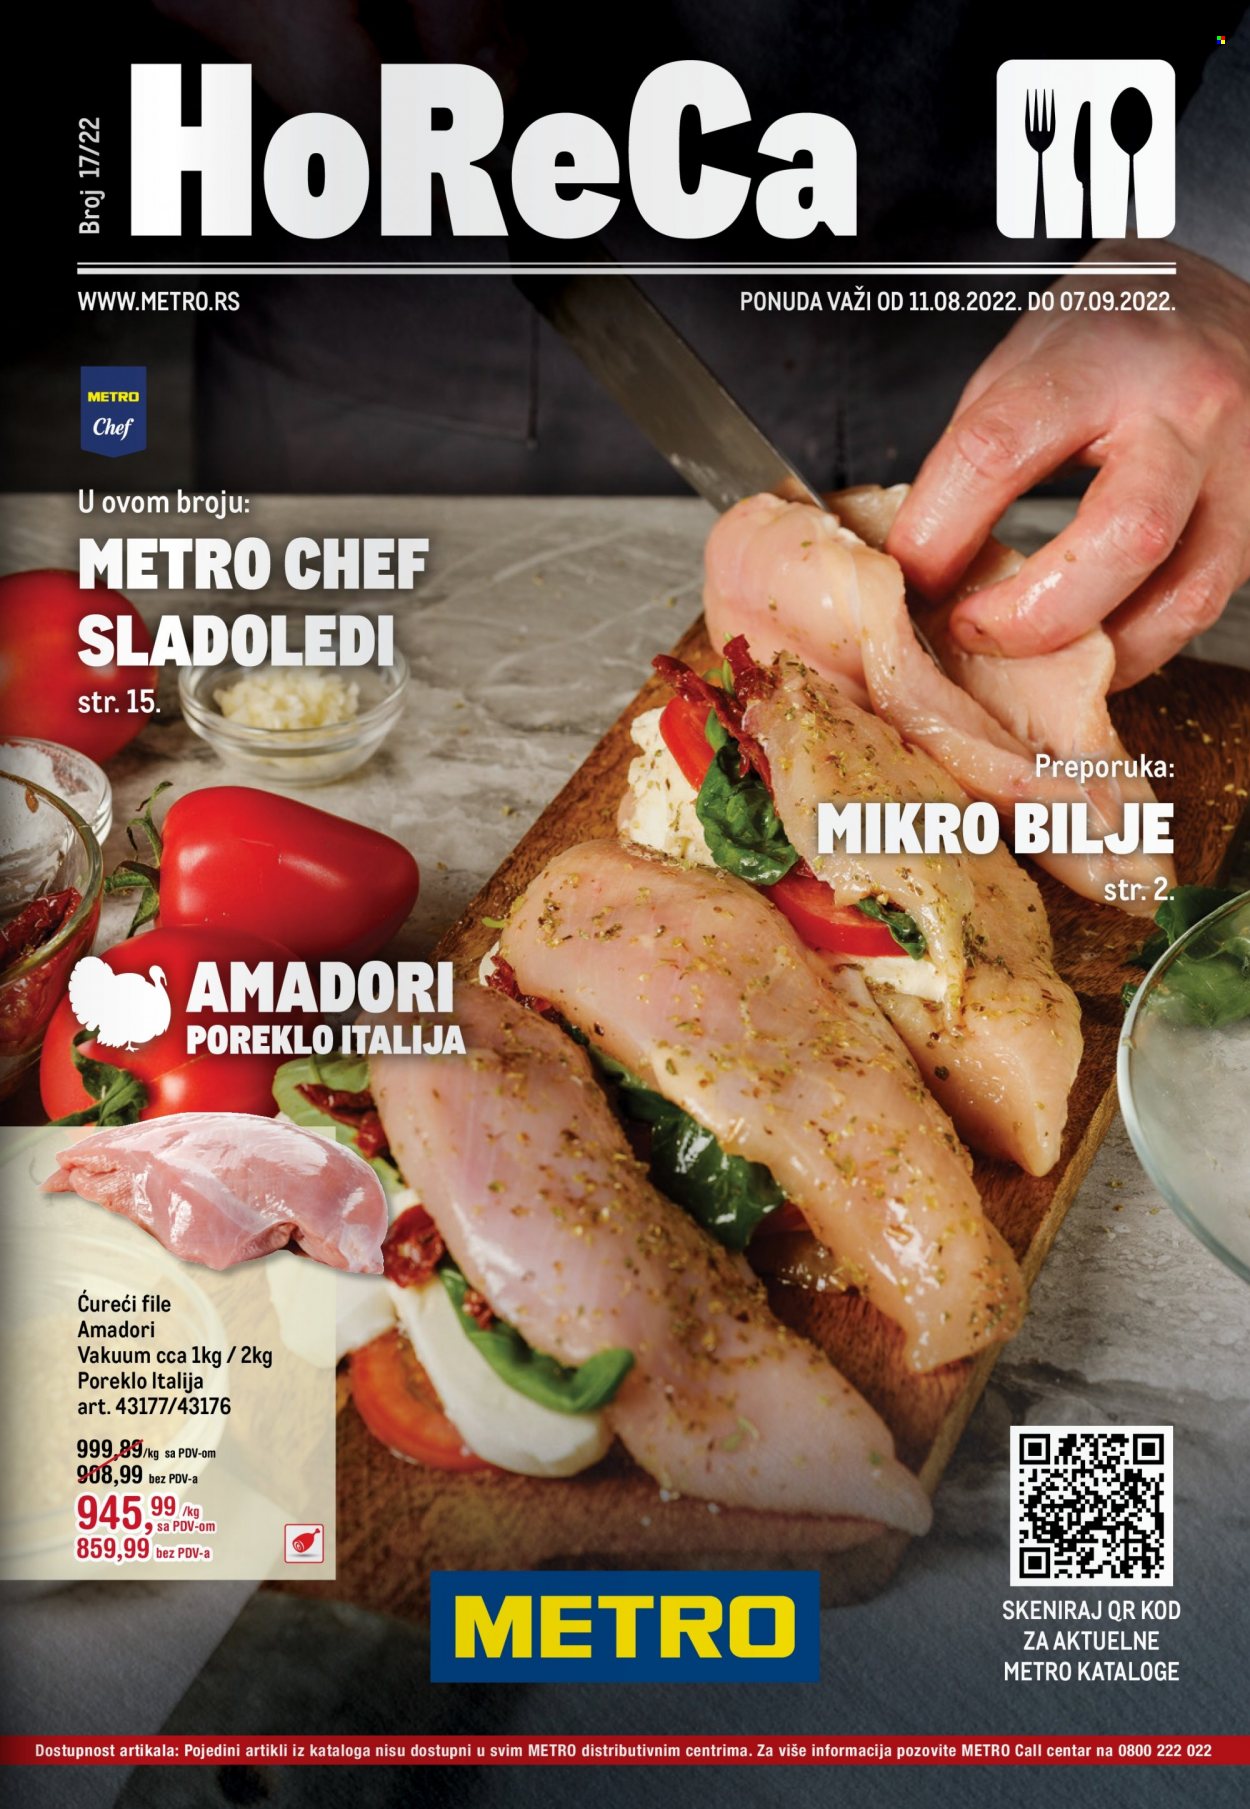 thumbnail - Metro katalog - 11.08.2022 - 07.09.2022 - Proizvodi na akciji - Metro Chef, ćureće meso, ćureći file, sladoled. Stranica 1.